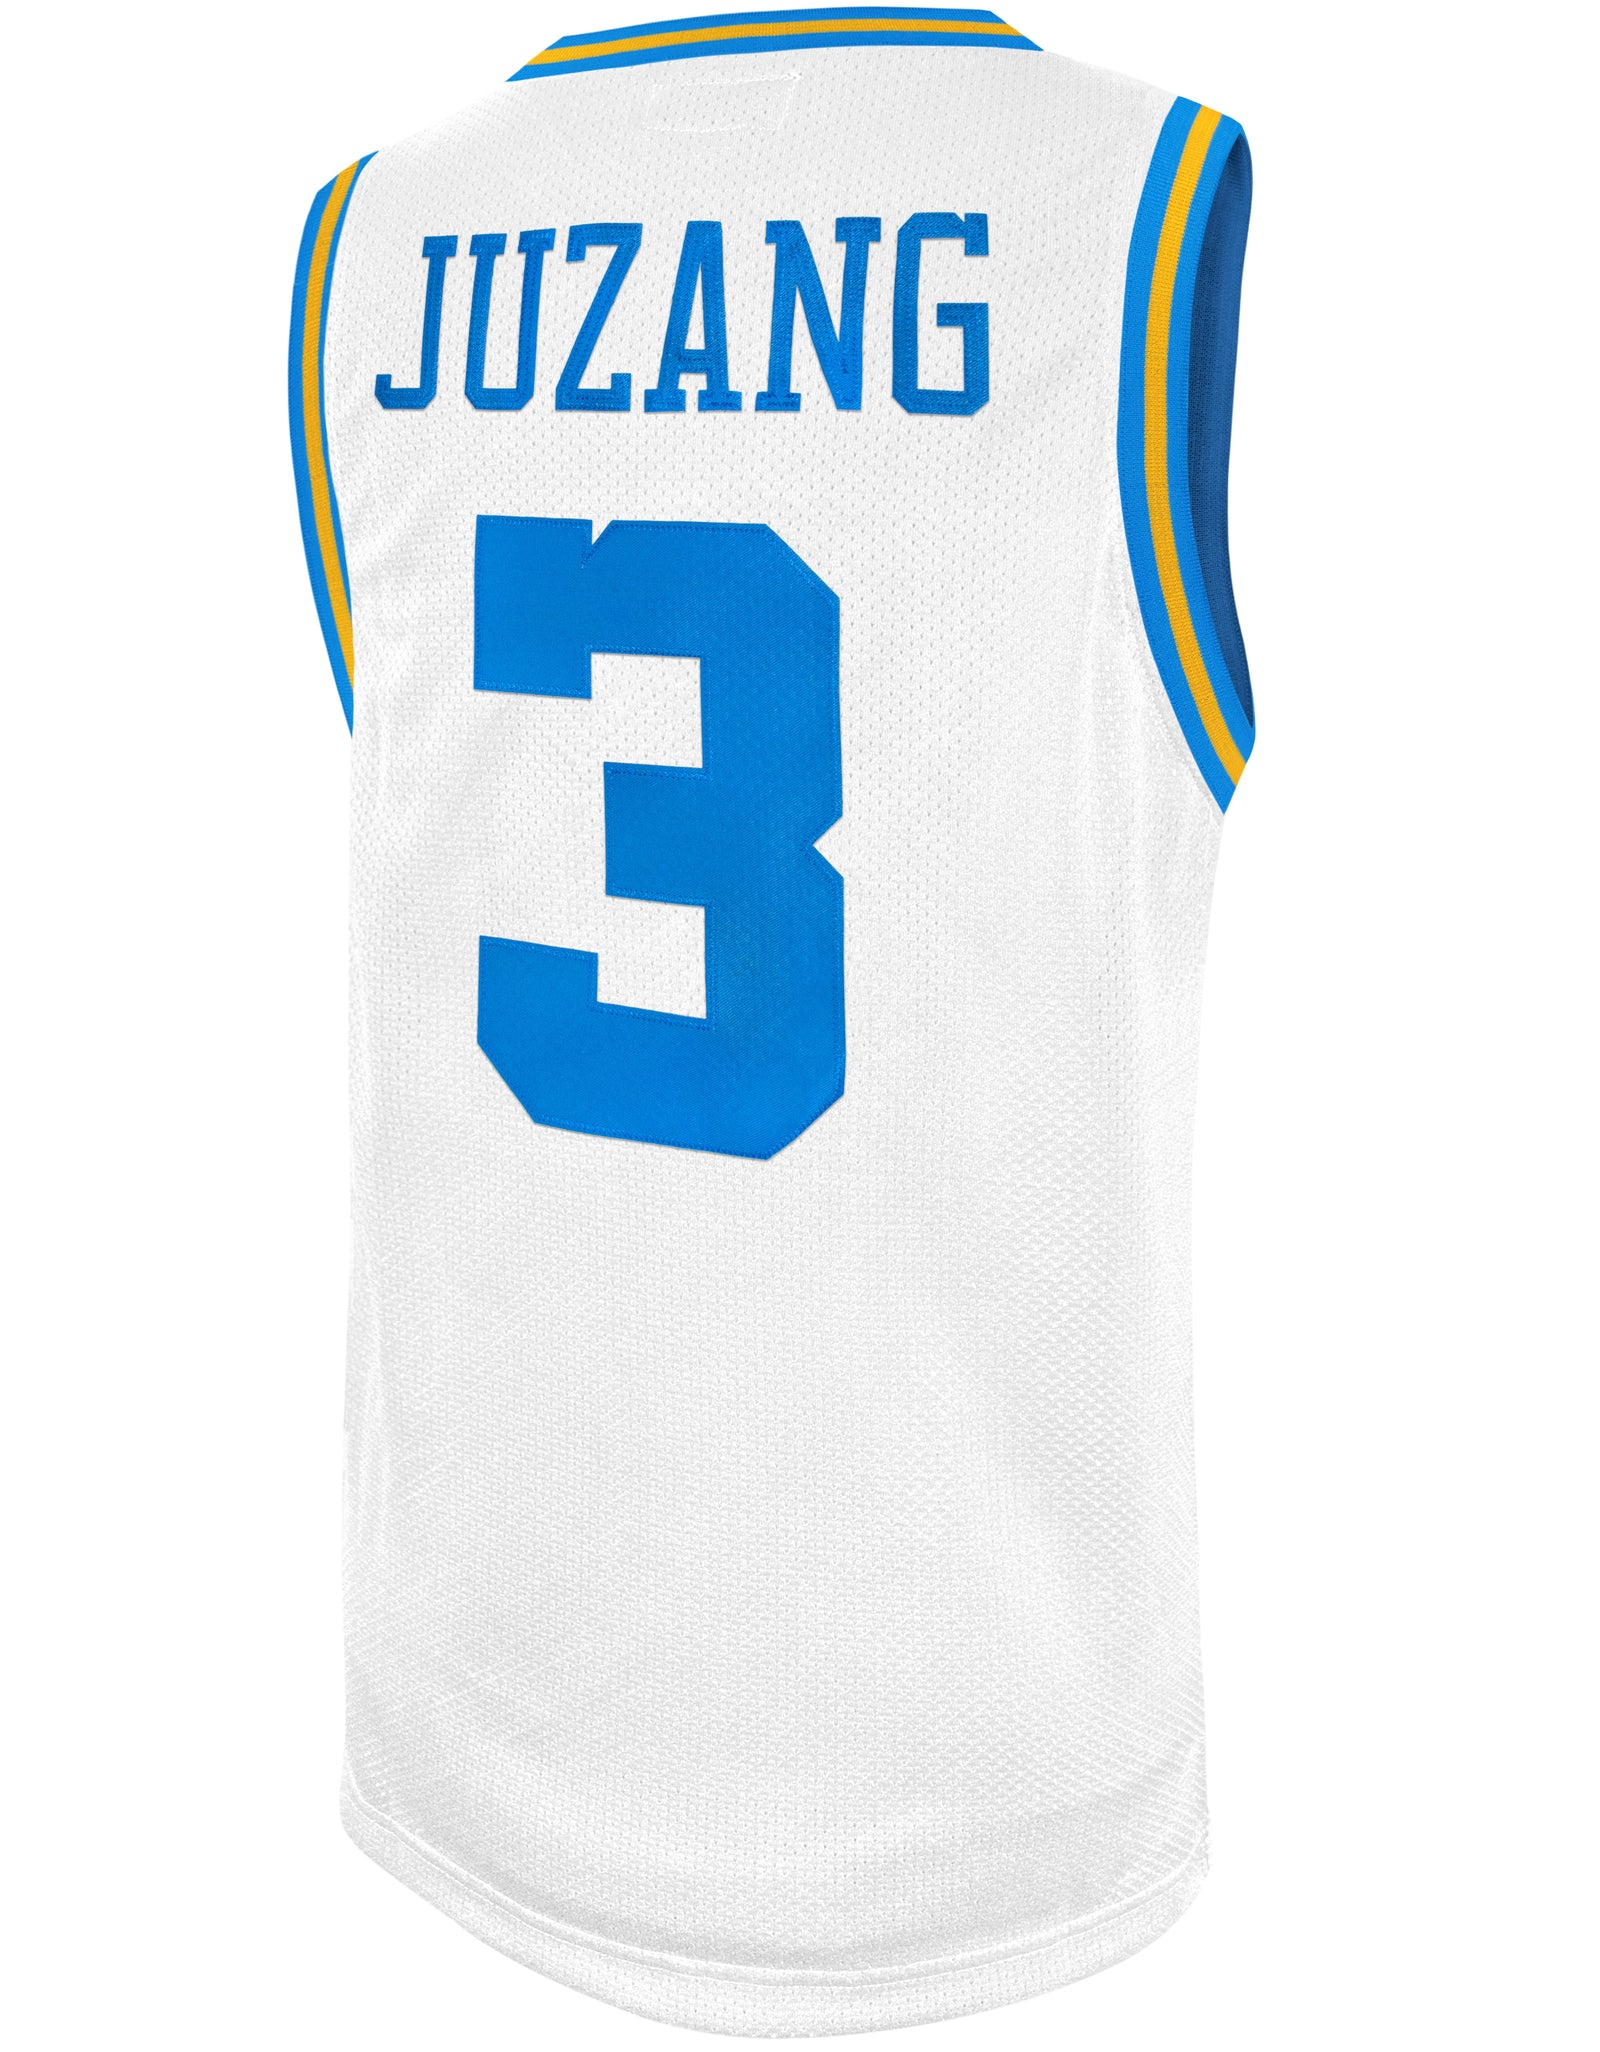 UCLA Bruins Johnny Juzang Screen Print Jersey – ORIGINAL RETRO BRAND